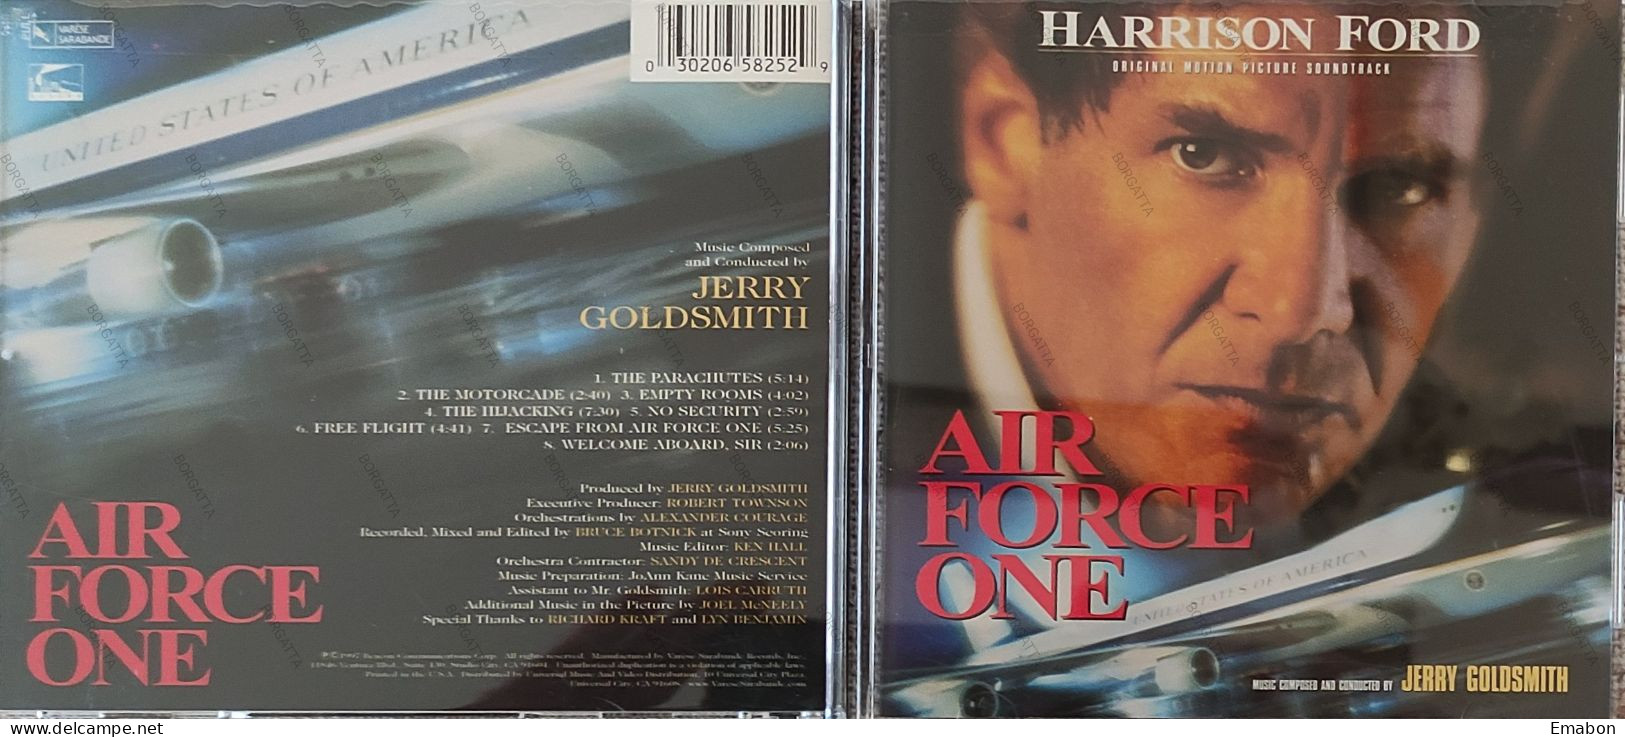 BORGATTA - FILM MUSIC  - Cd  HARRISON FORD - AIR FORCE ONE - VARESE SARABANDE 1997 - USATO In Buono Stato - Filmmuziek